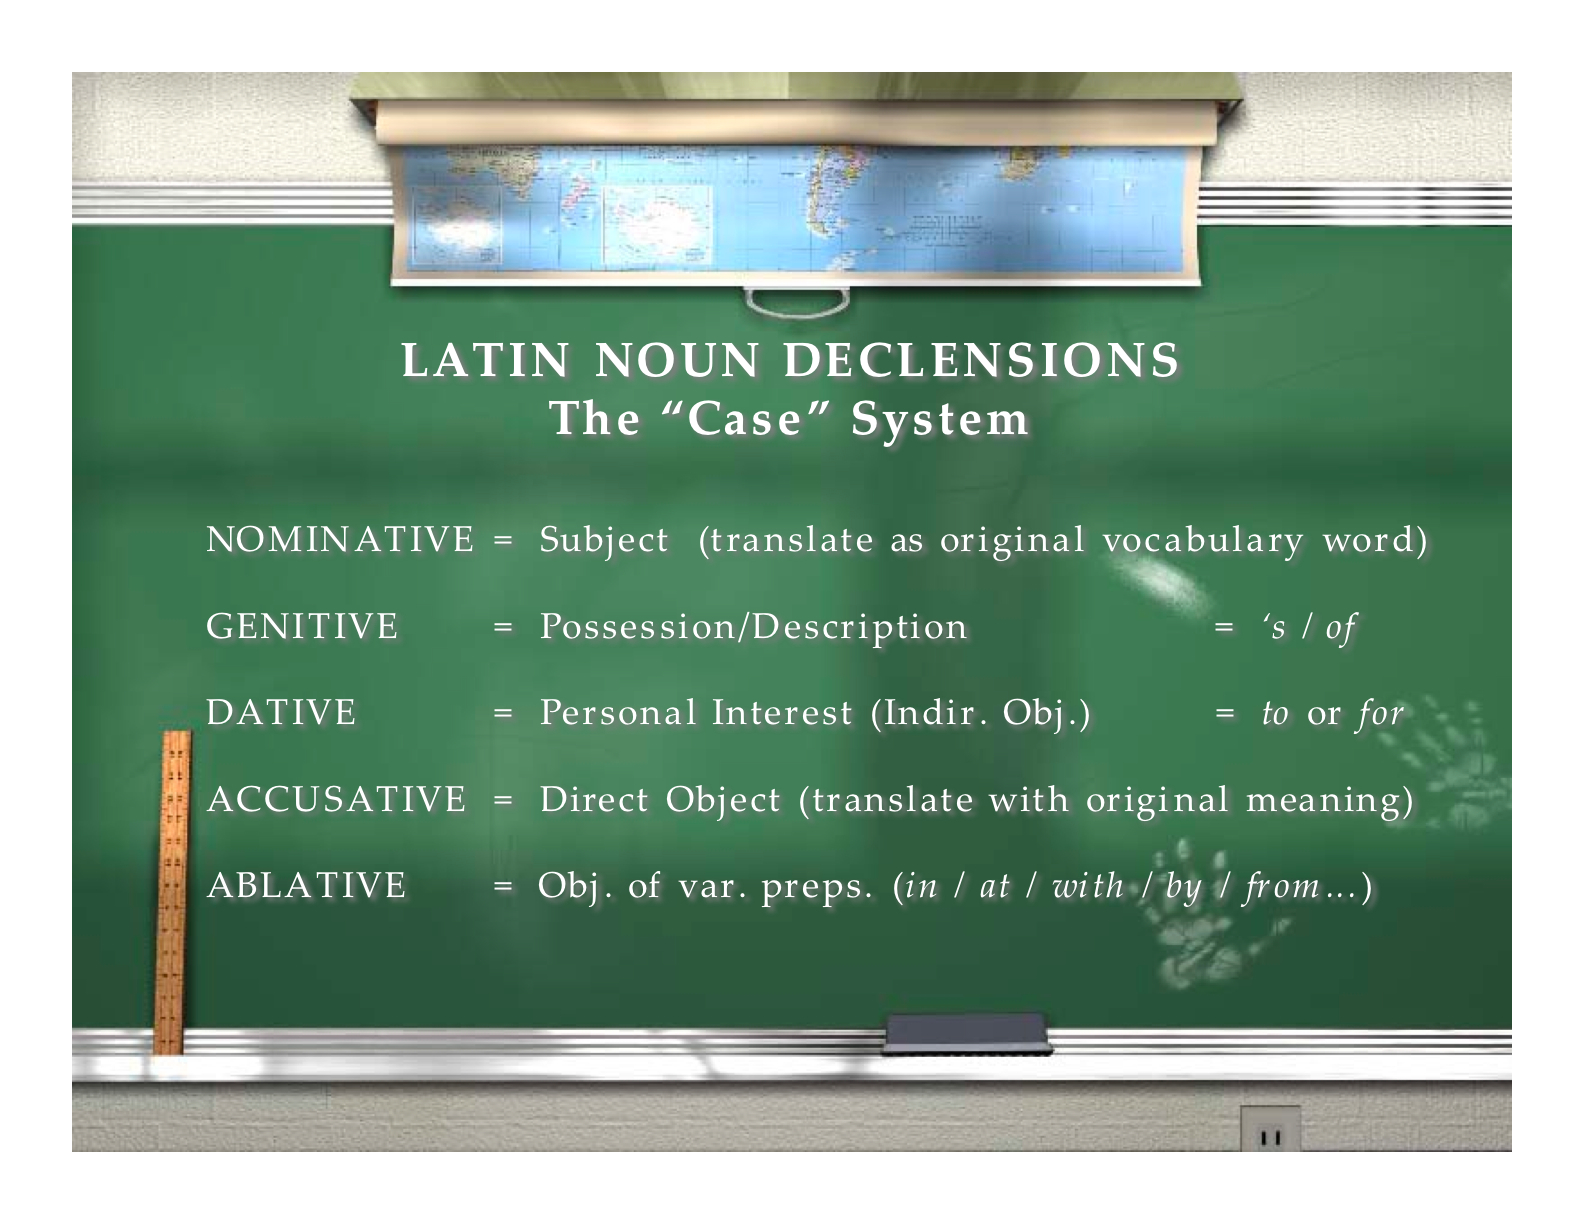 Latin Cases Chart